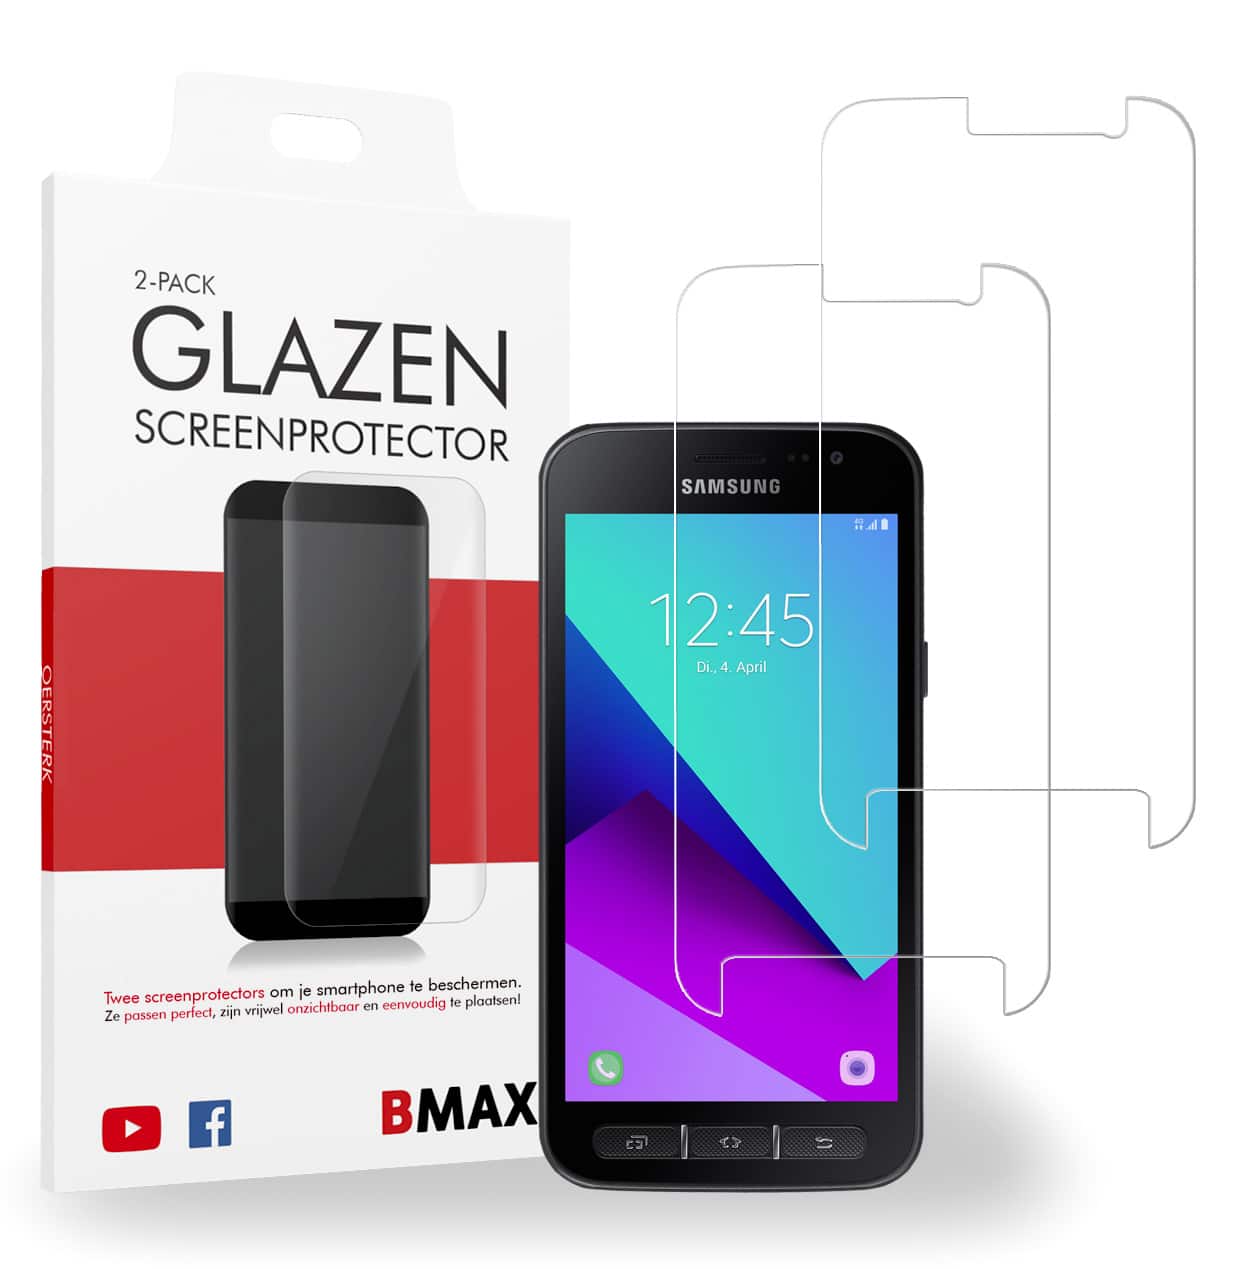 Samsung galaxy Xcover 4s glazen screenprotector